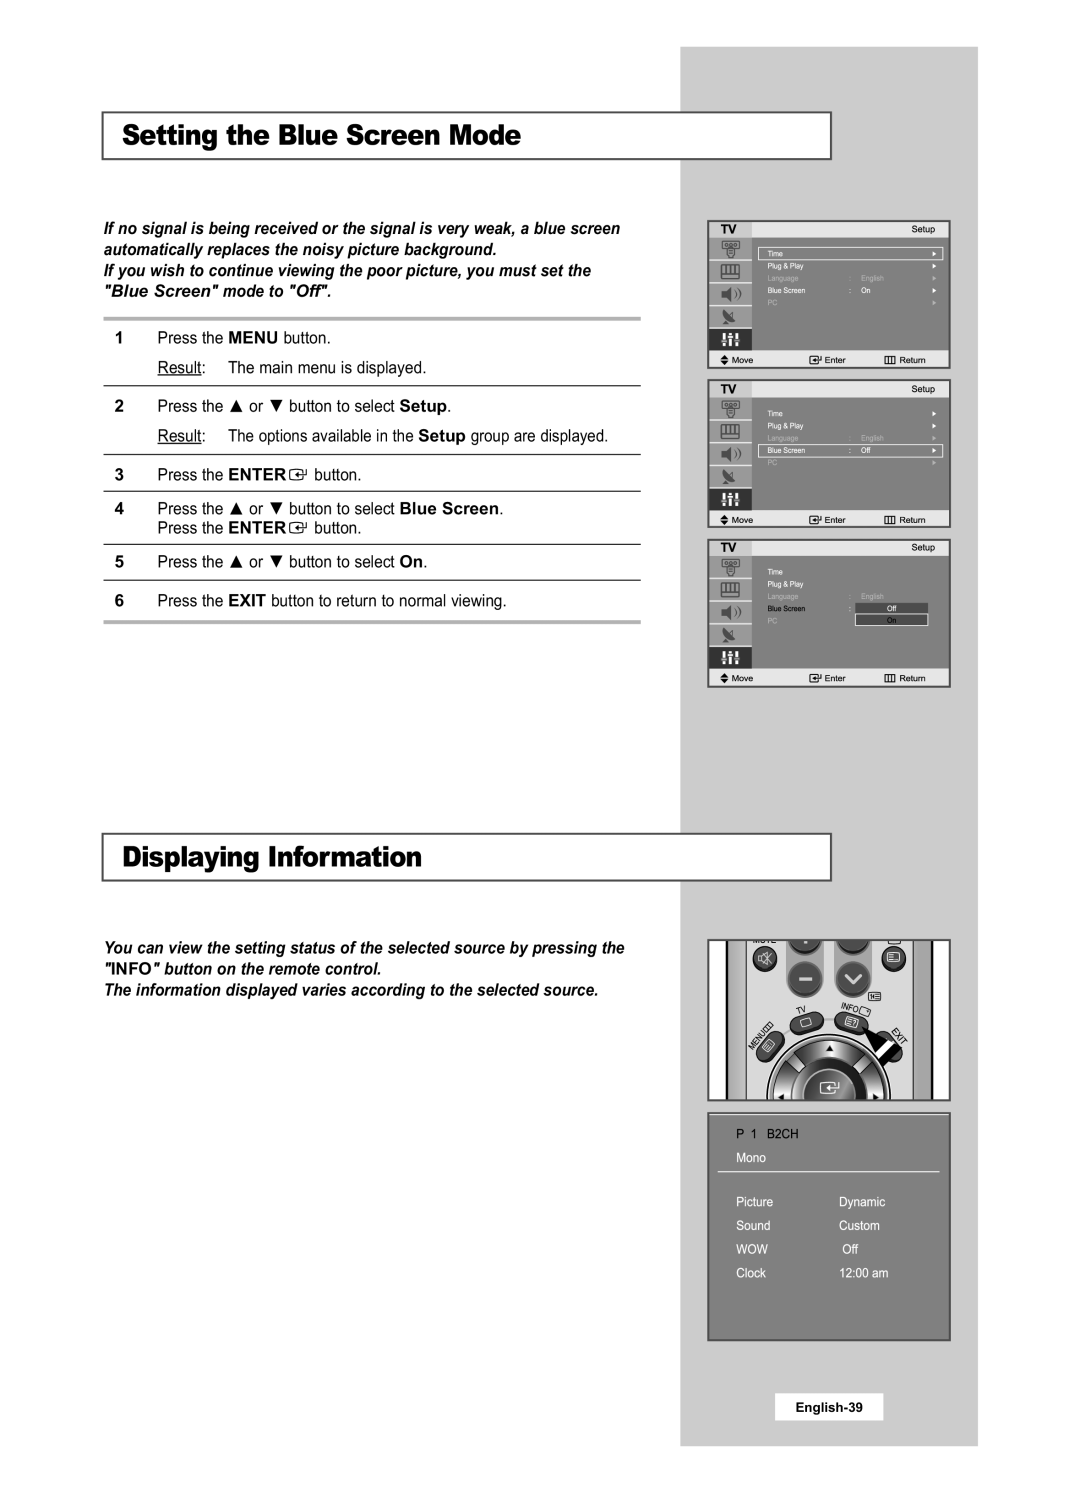 Samsung LA22N21B manual Setting the Blue Screen Mode, Displaying Information 